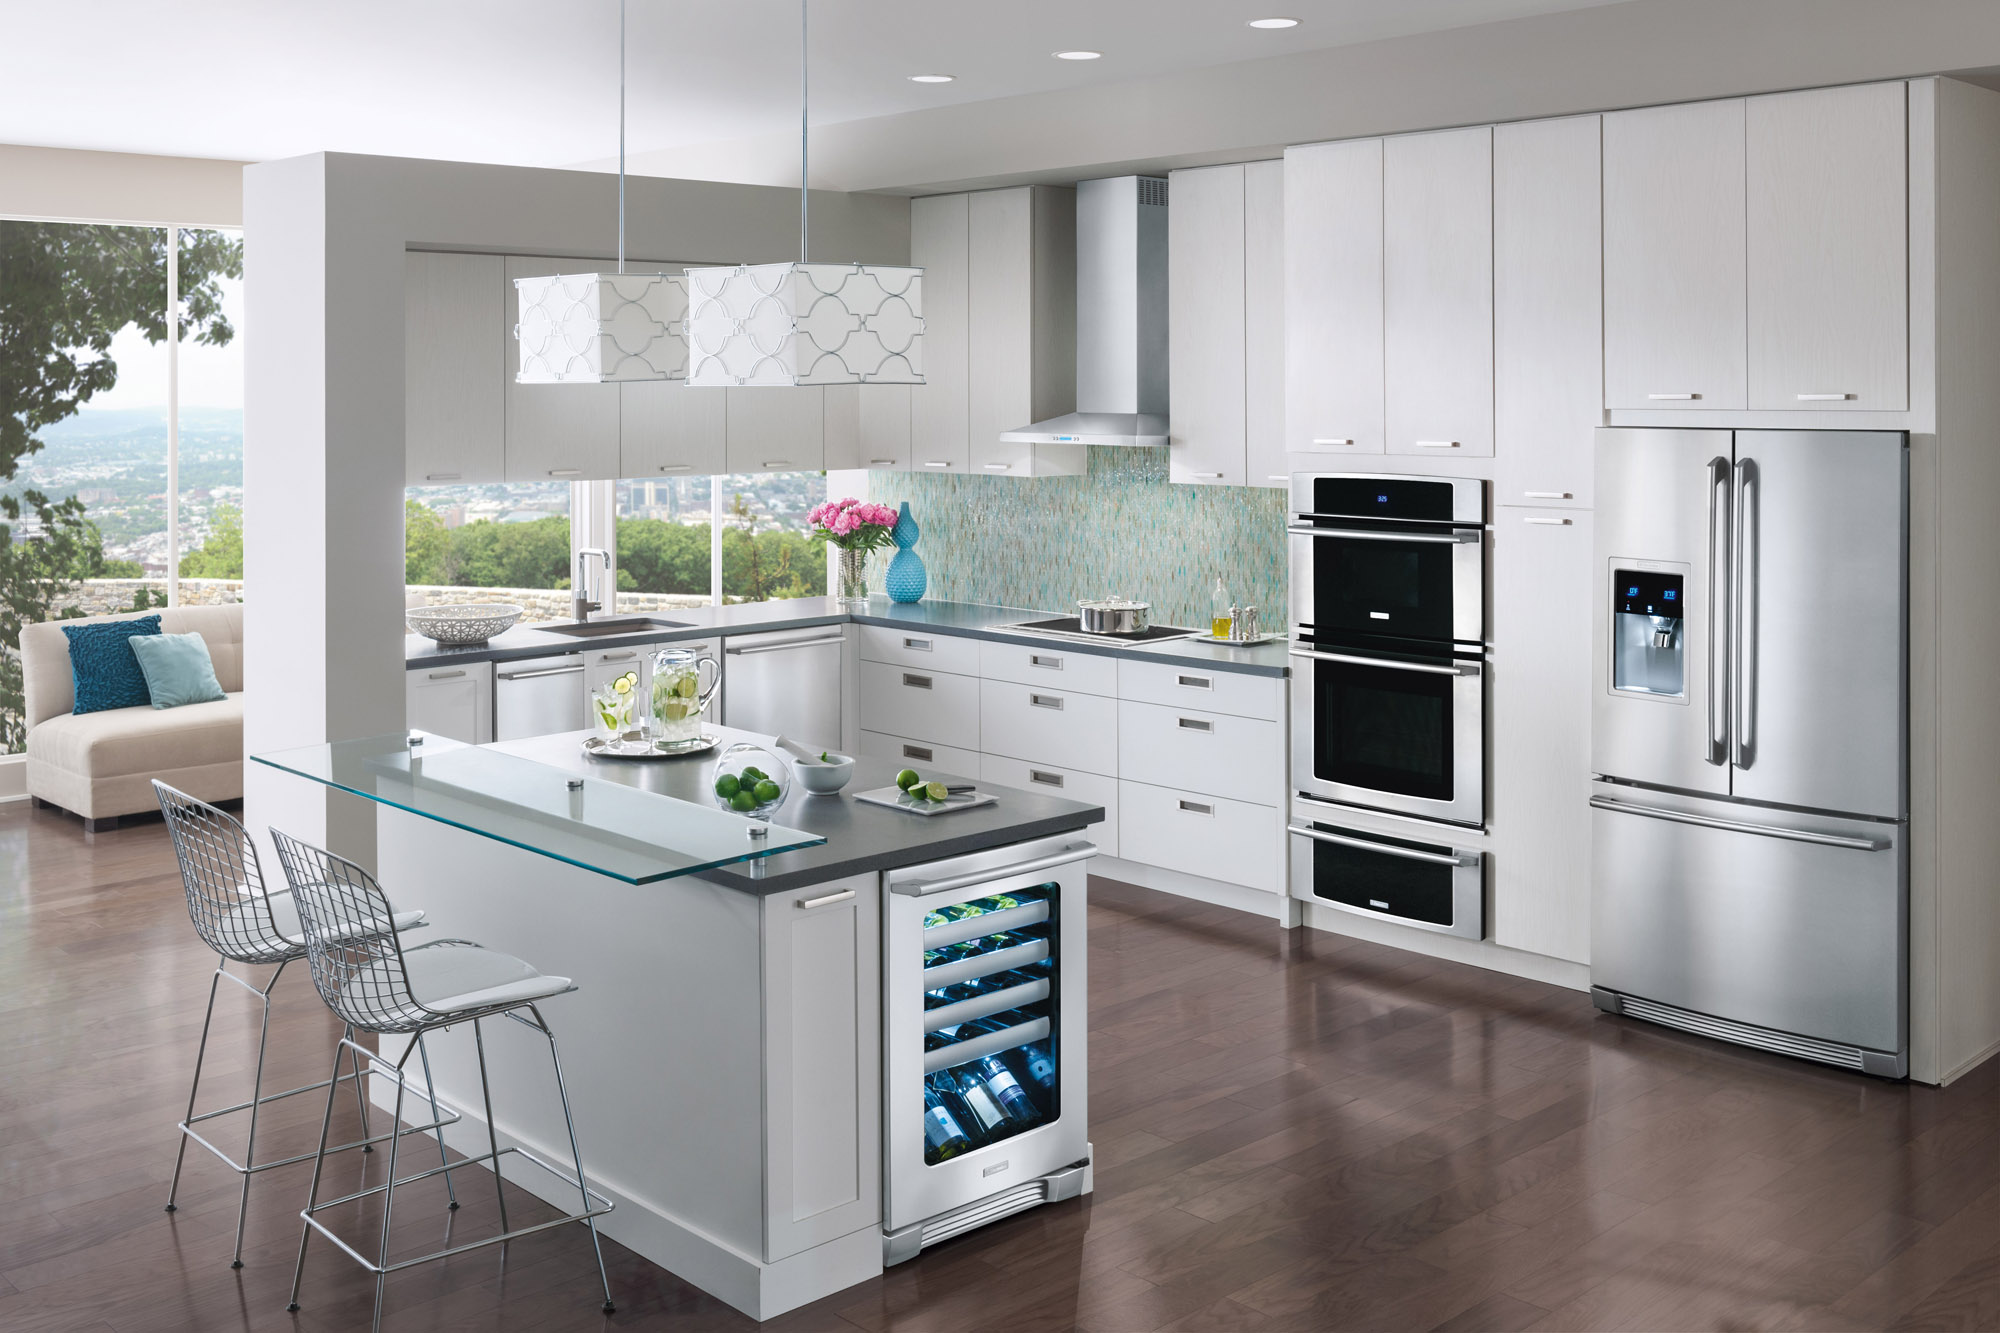 White kitchen appliances are making a comeback - Kitchen trends